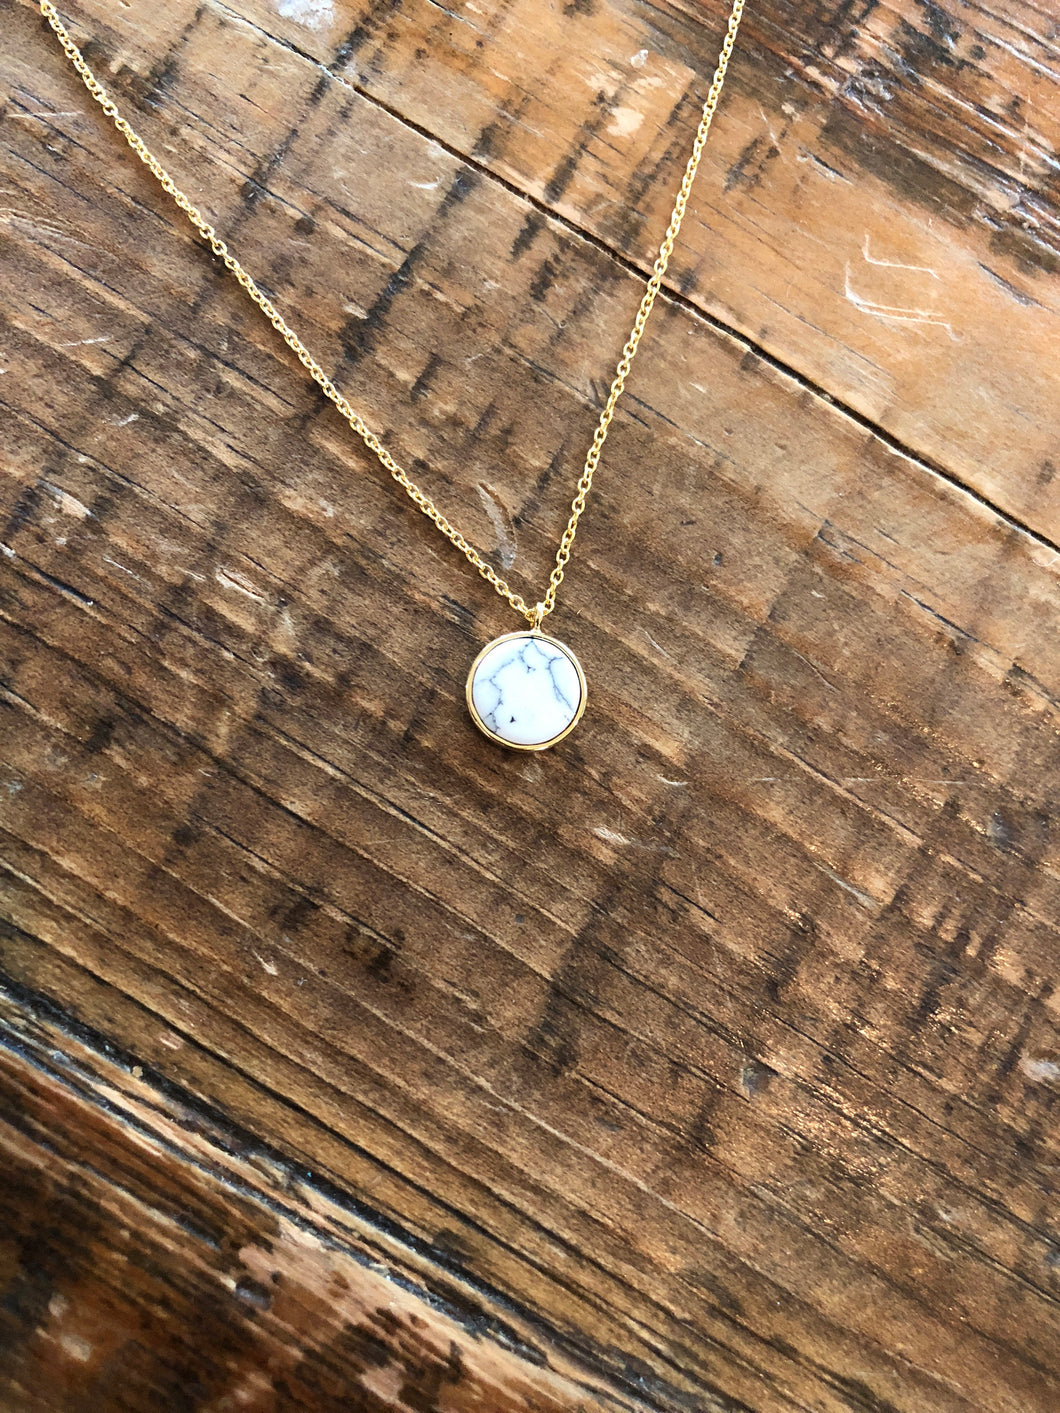 turquoise/white marble round flat pendant necklace